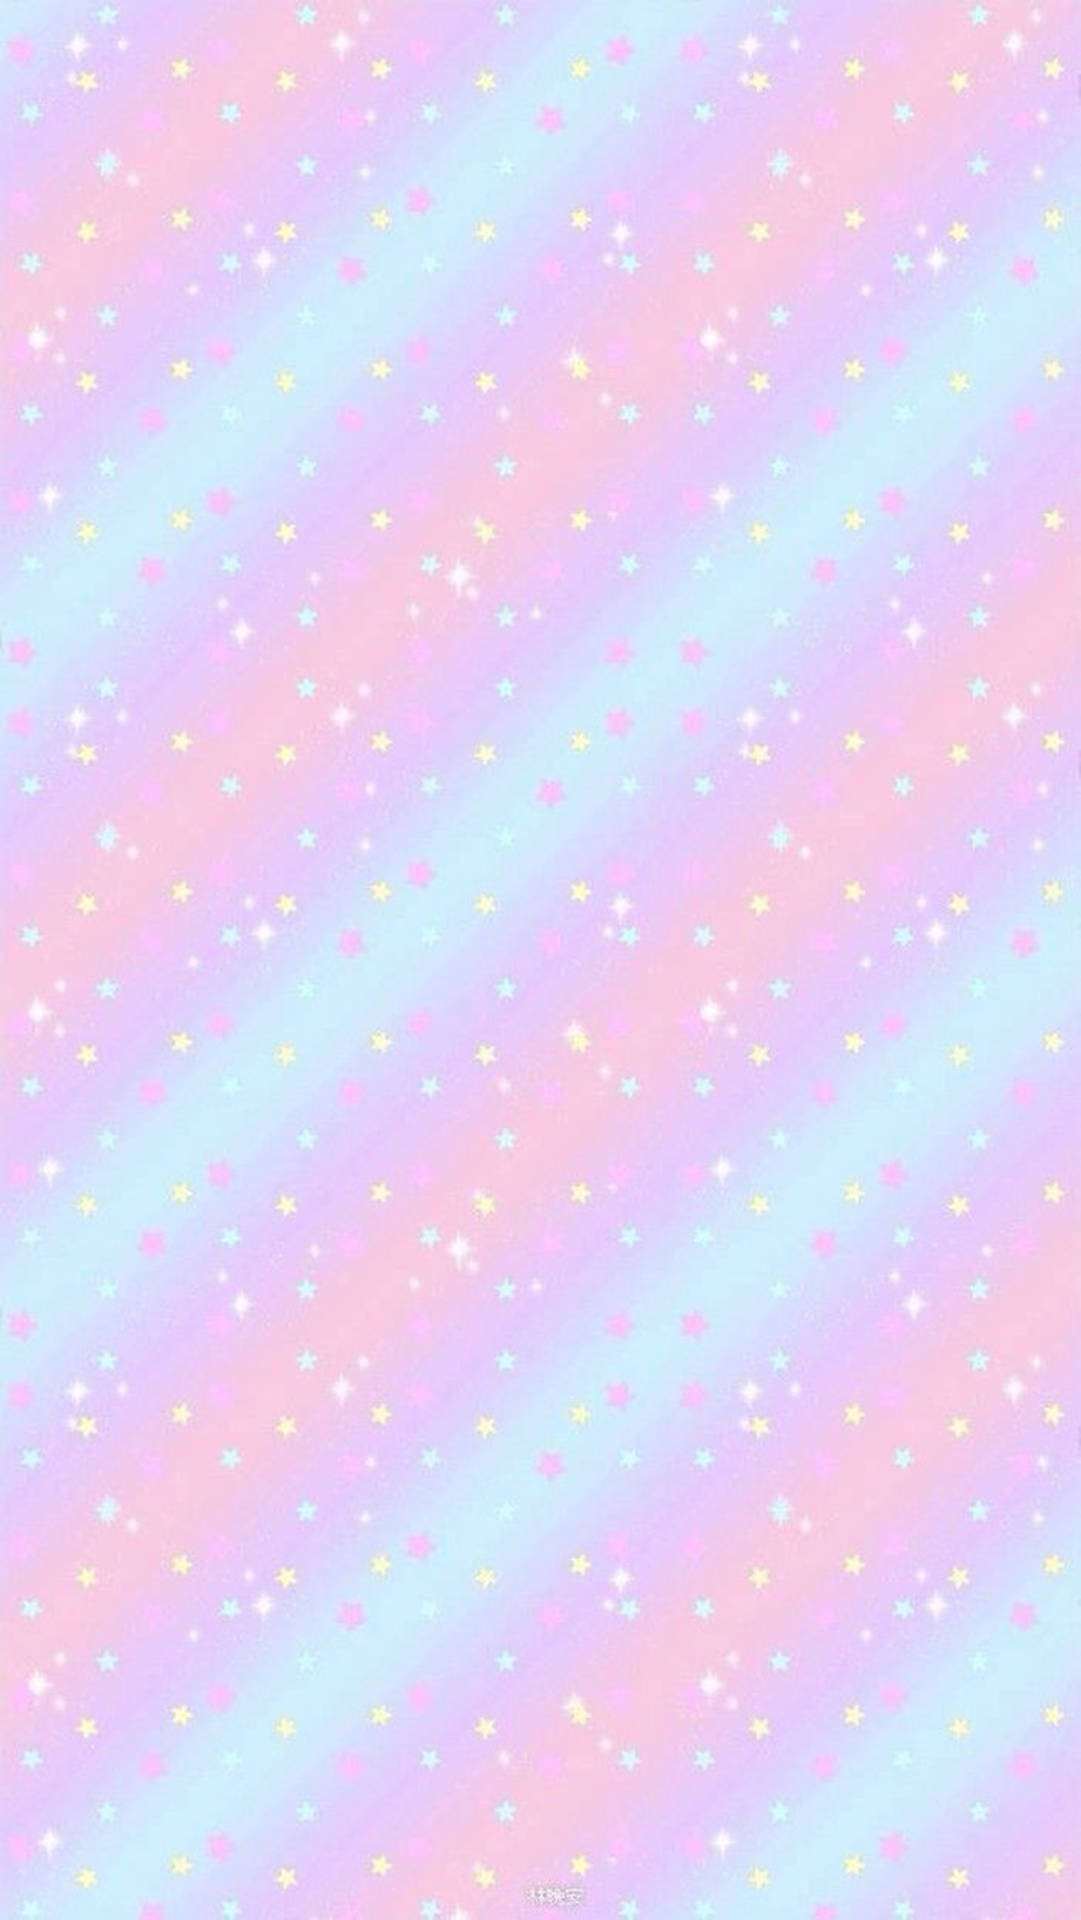 Whimsical Diagonal Pattern In Cute Pastel Colors